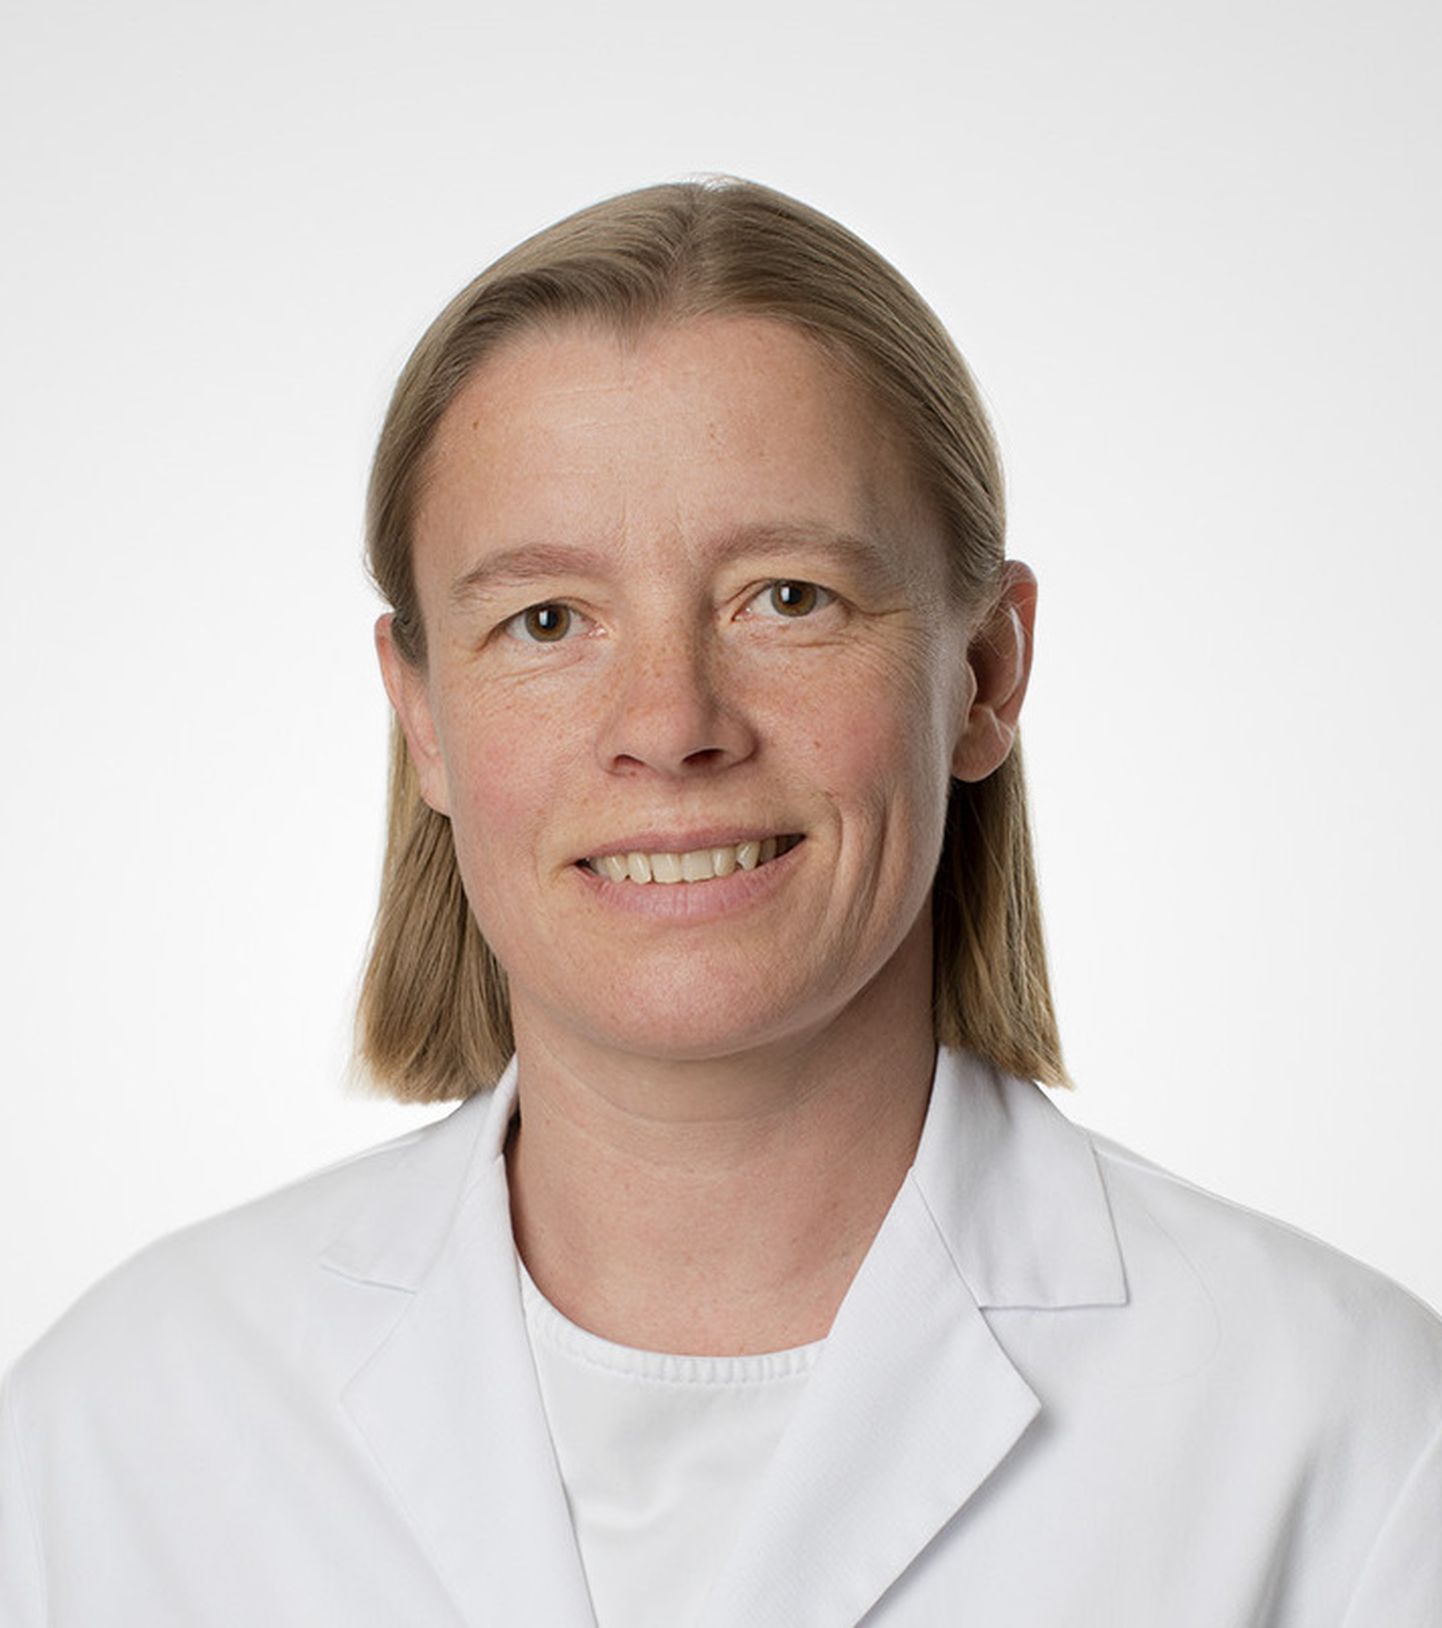 Anestesioloogia ja intensiivravi teadur Annika Reintam Blaser.